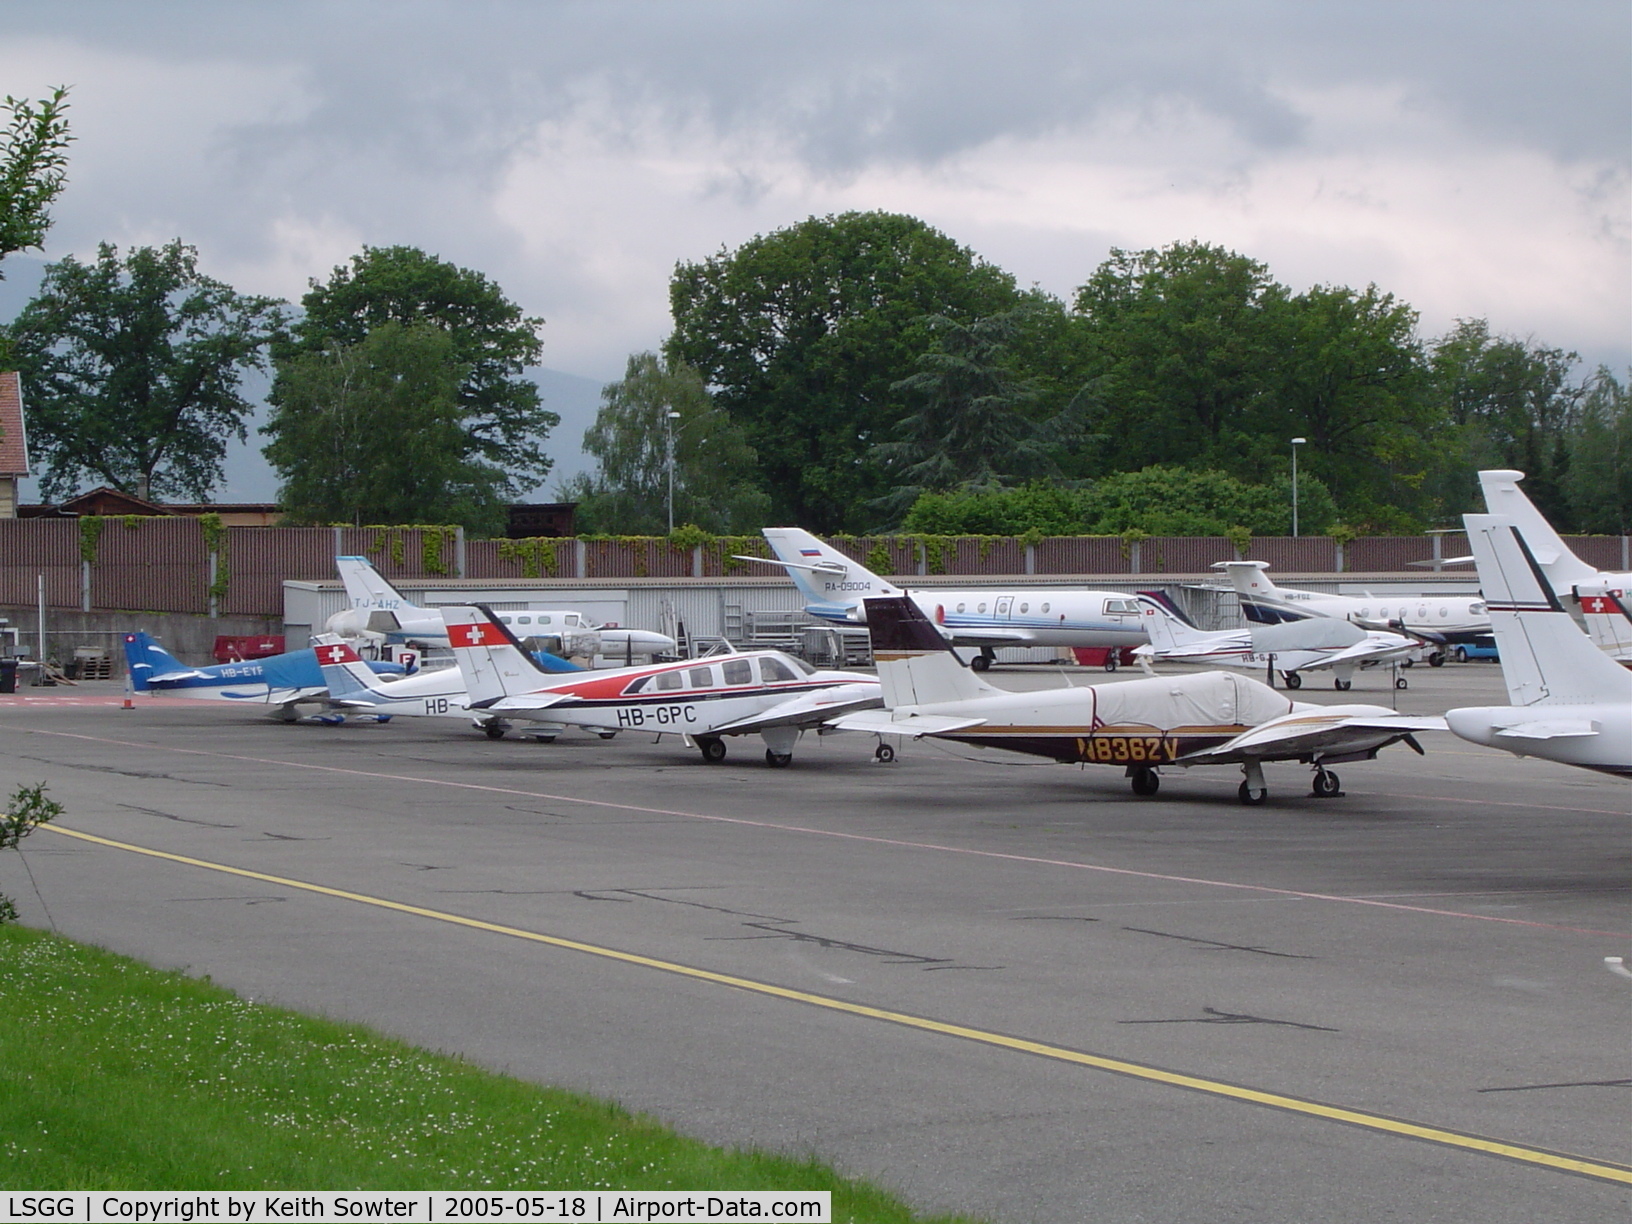 Geneva Cointrin International Airport, Geneva Switzerland (LSGG) - GA Parking Area